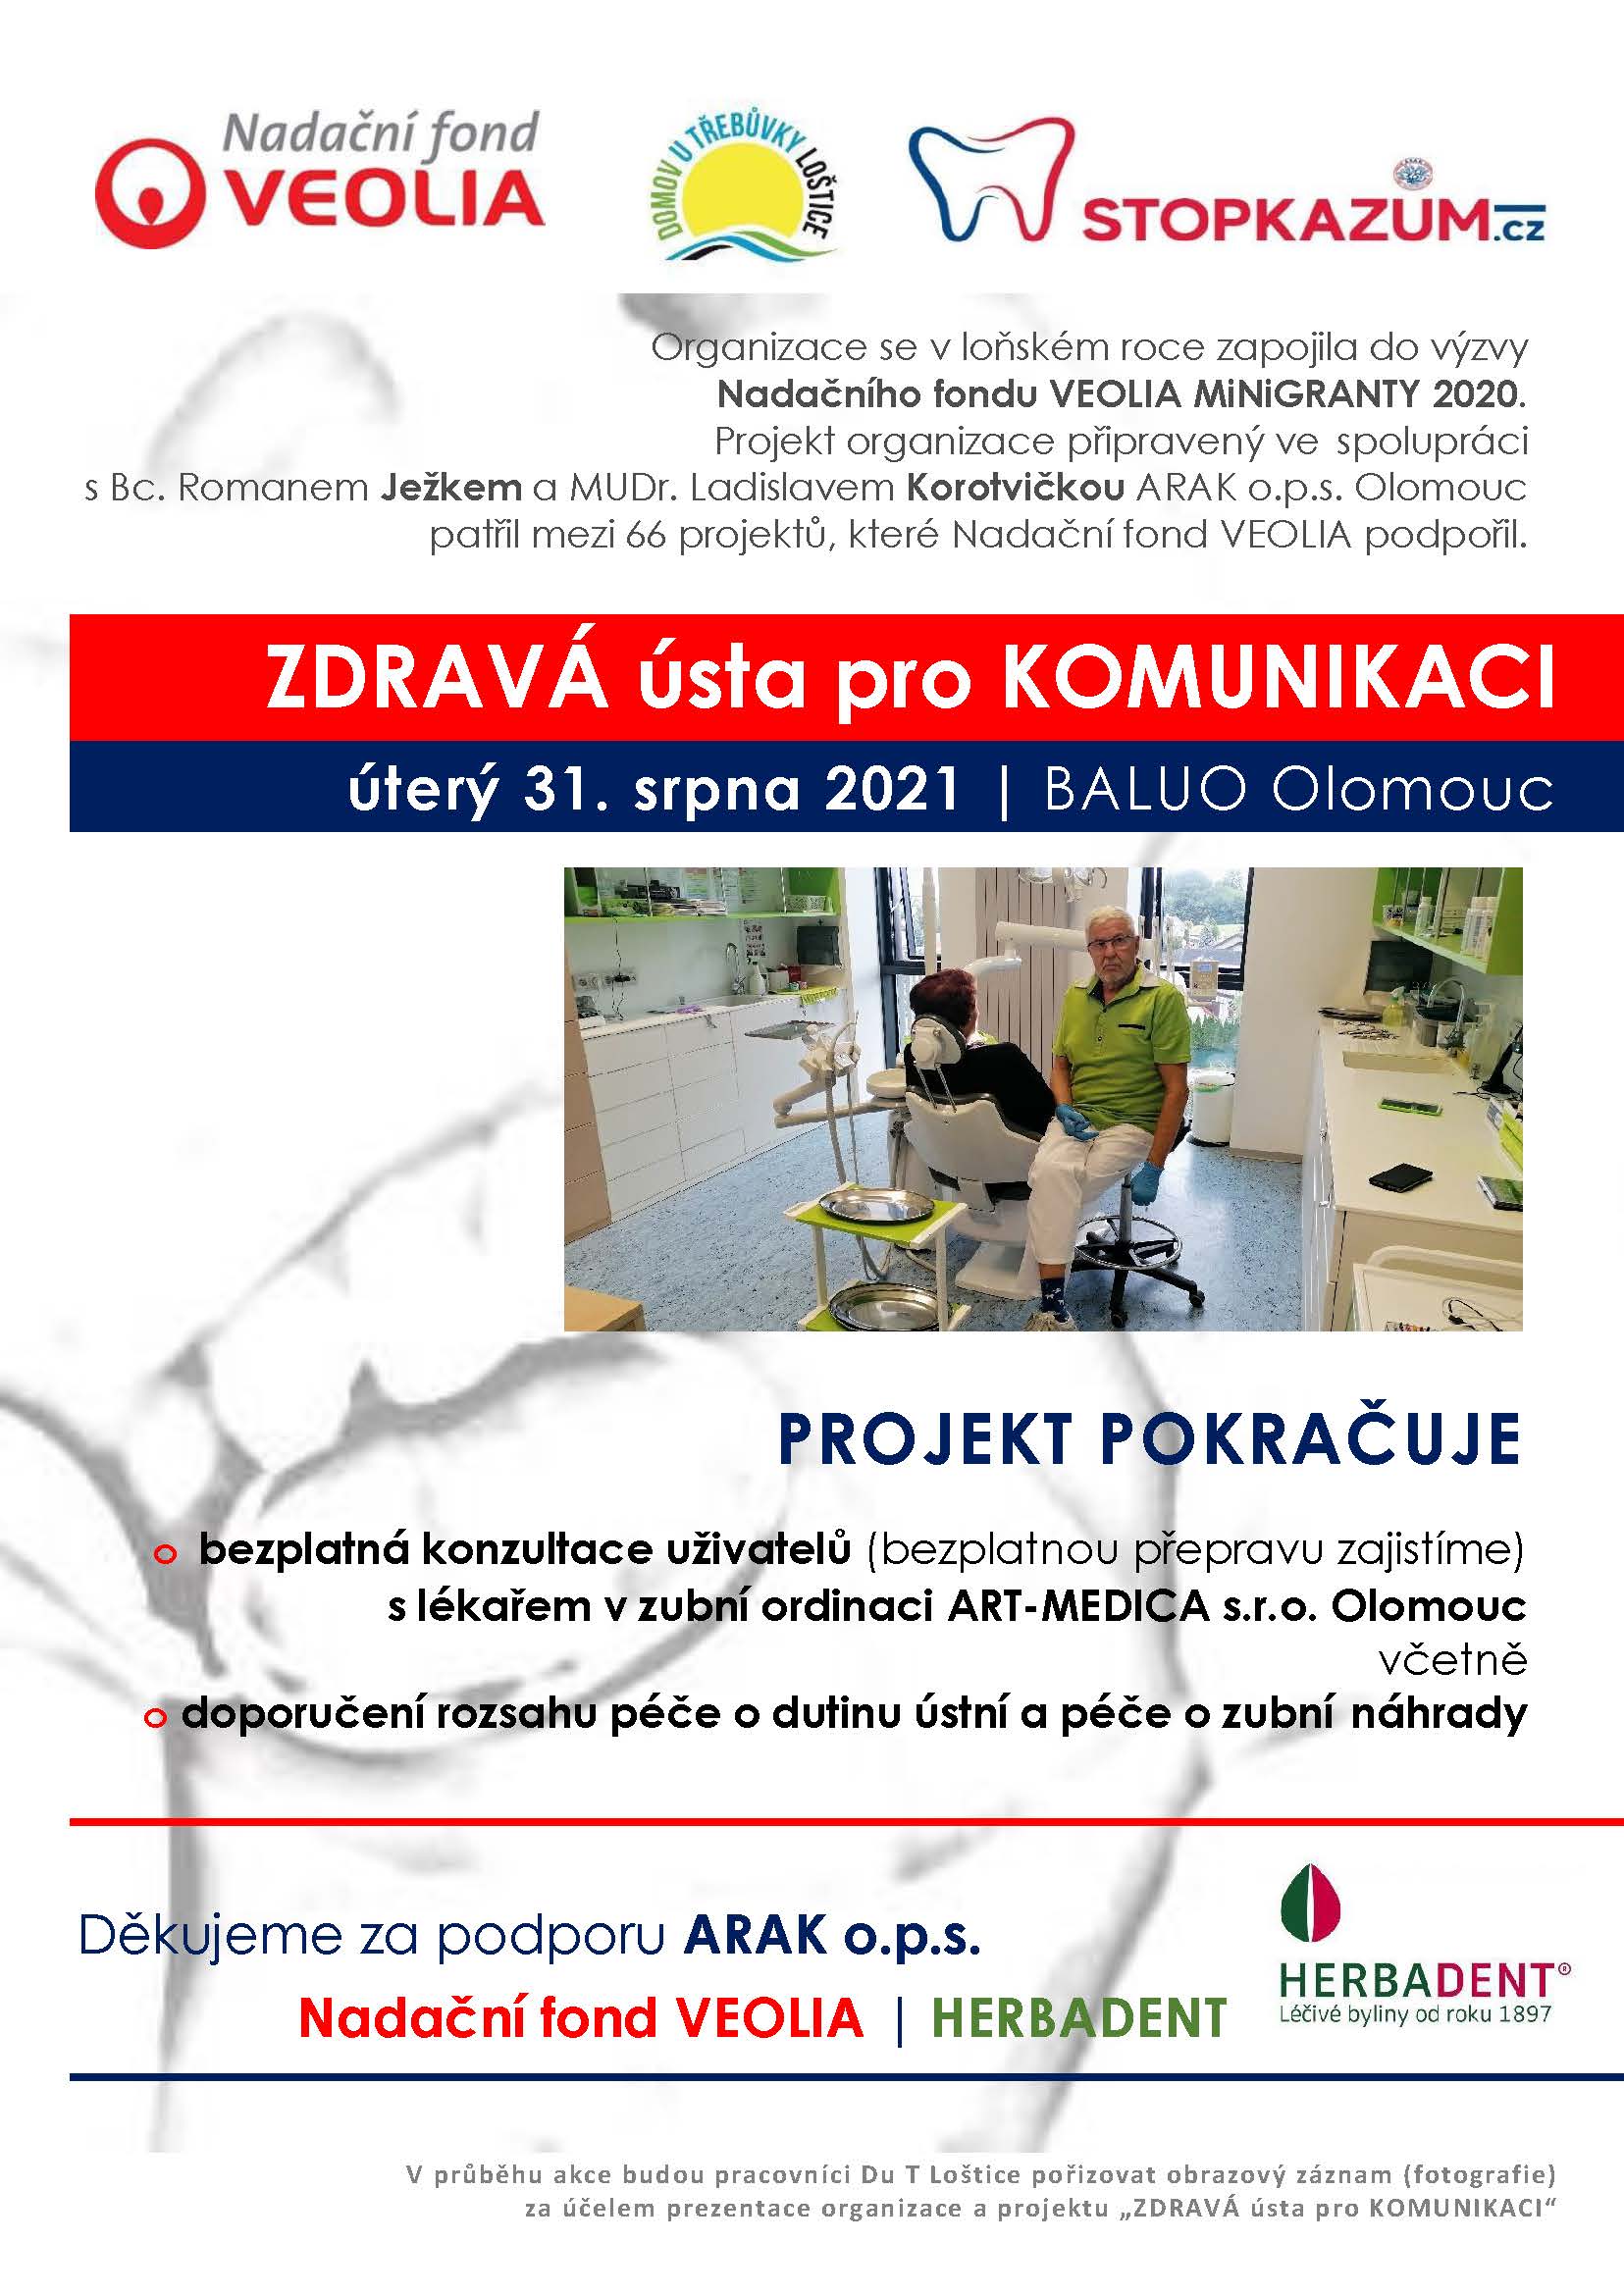 Pozvanka-ZDRAVA-usta-pro-KOMUNIKACI_20210831-1.jpg